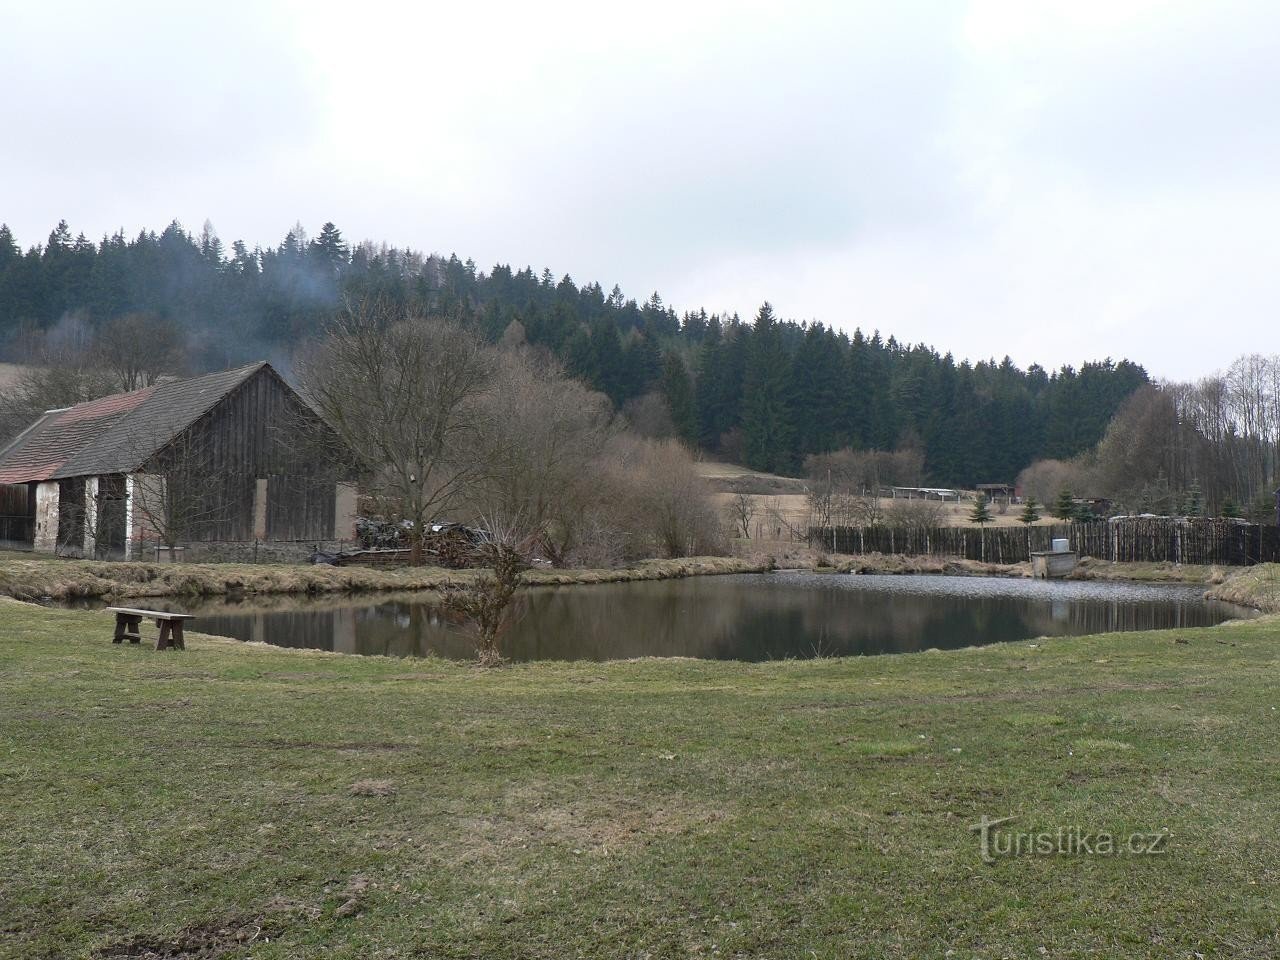 Čihan, a pond in the village